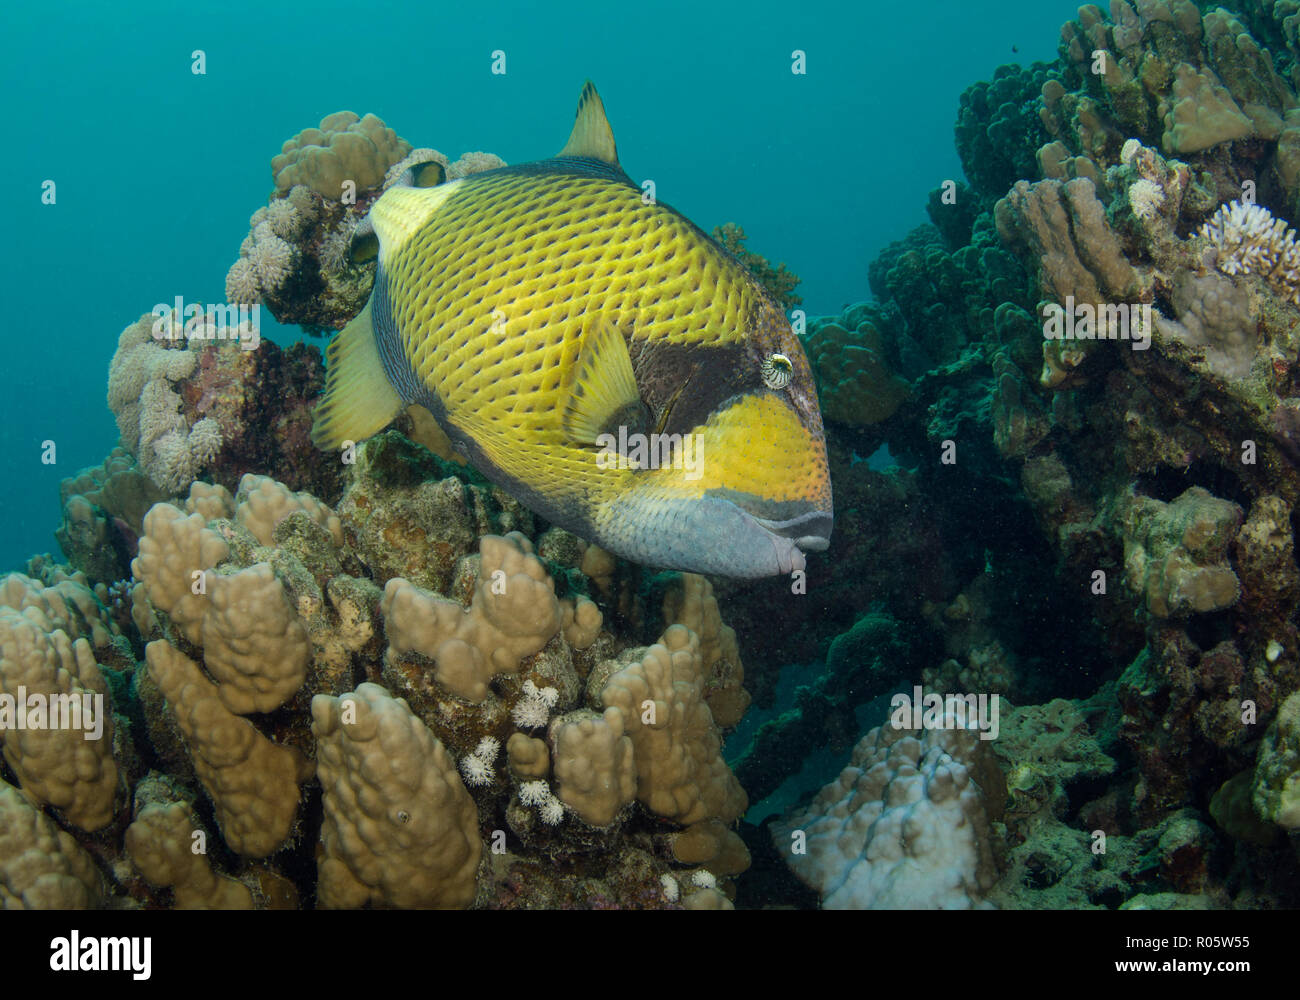 Titan triggerfish, Balistoides viridescens, on coral reef, Hamata, Red Sea, Egypt Stock Photo